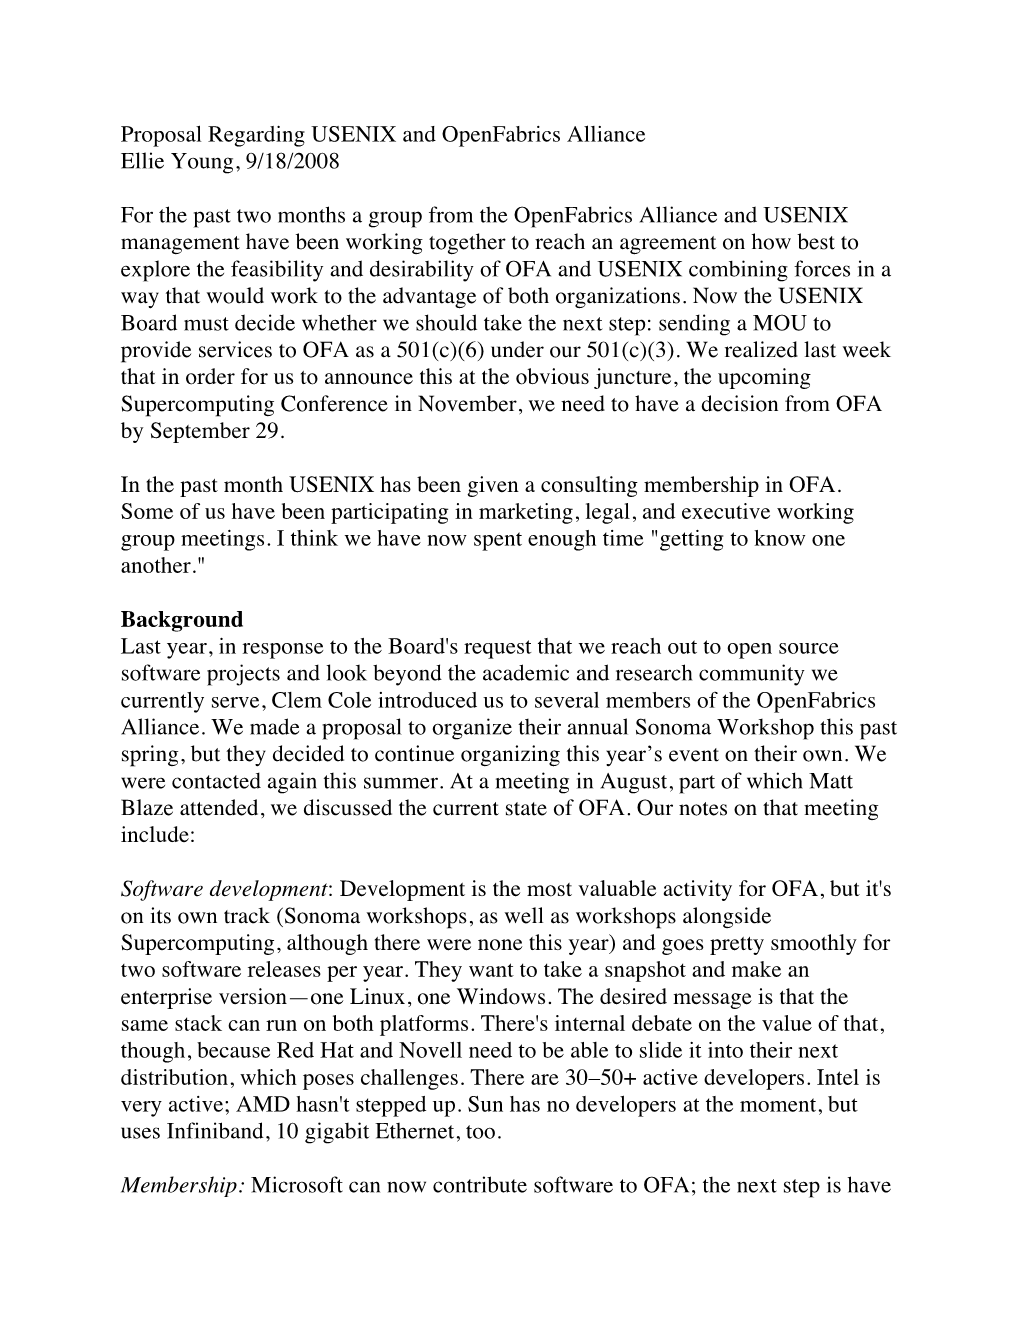 Proposal Regarding USENIX and Openfabrics Alliance Ellie Young, 9/18/2008